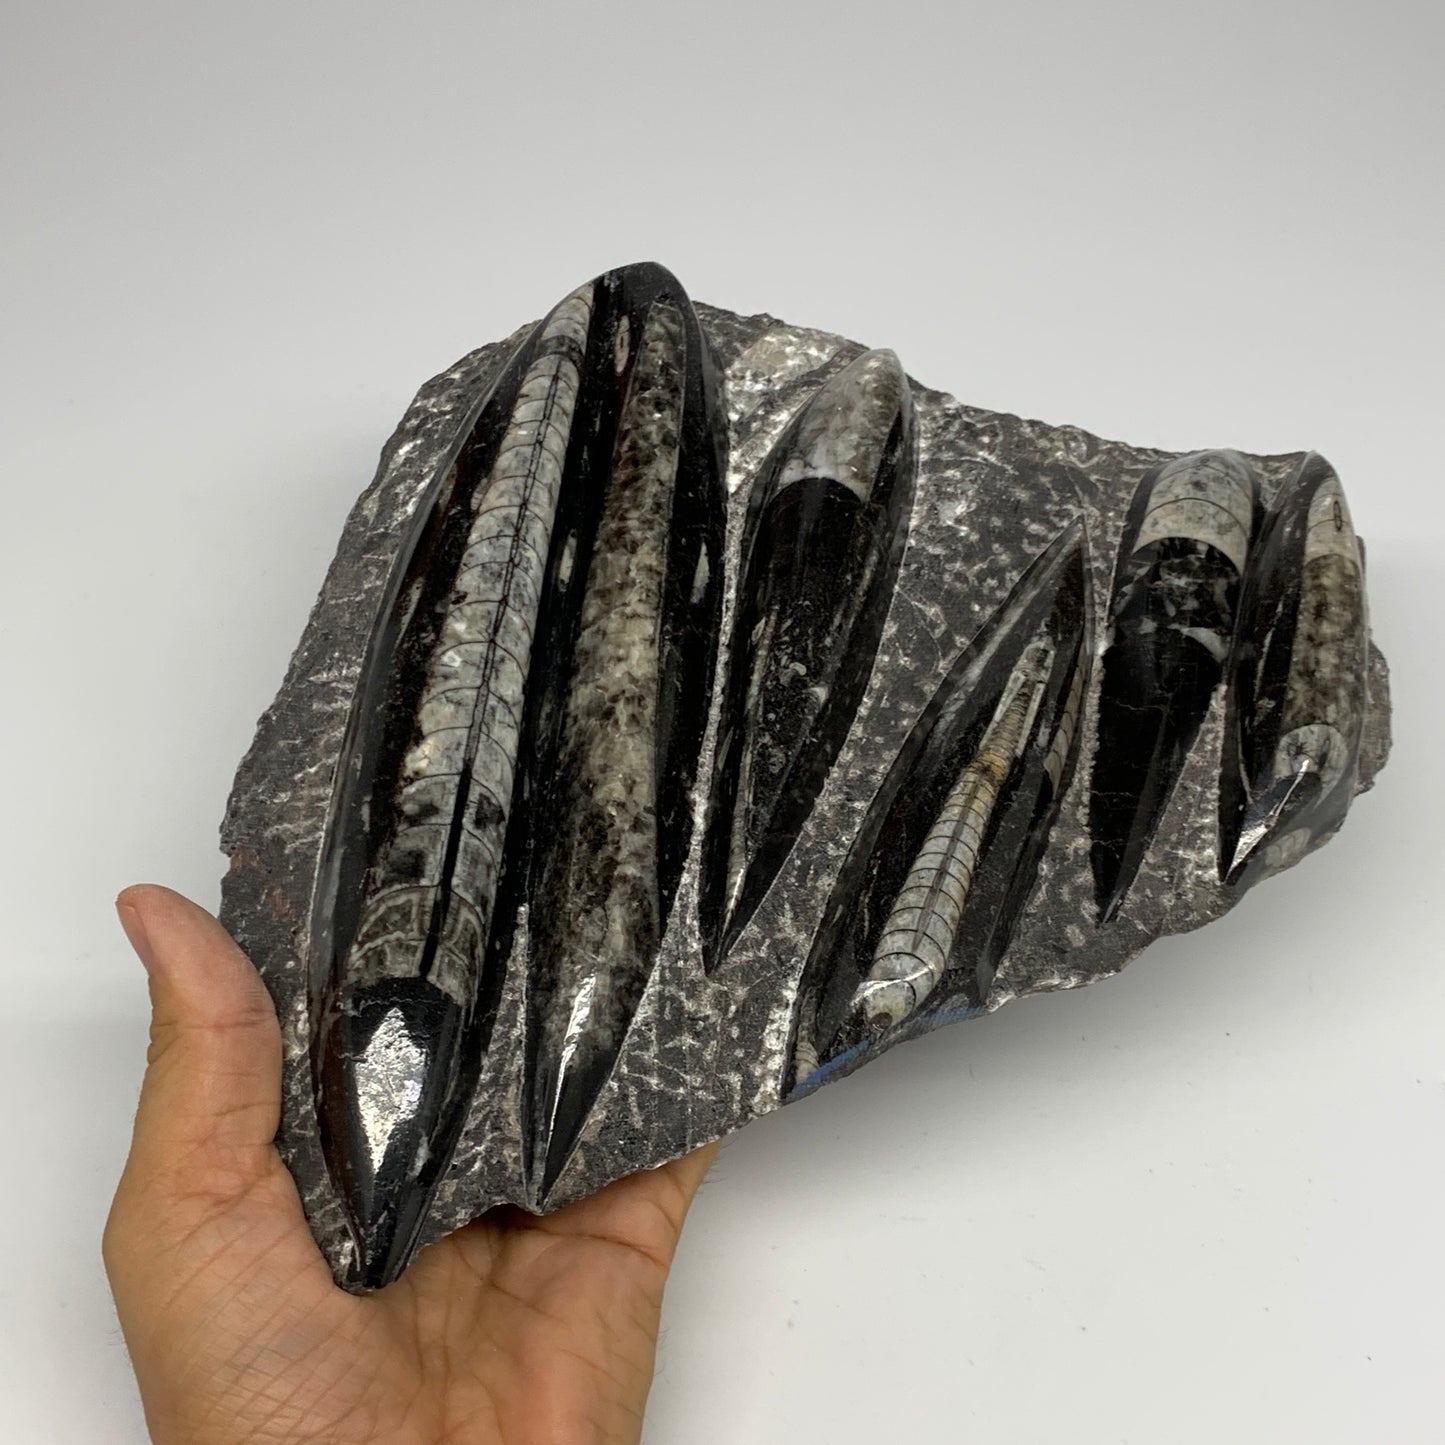 1850g,10.75"x7.9"x1.6" Fossils Orthoceras Plate Plaque SQUID, Home Decor, B23496